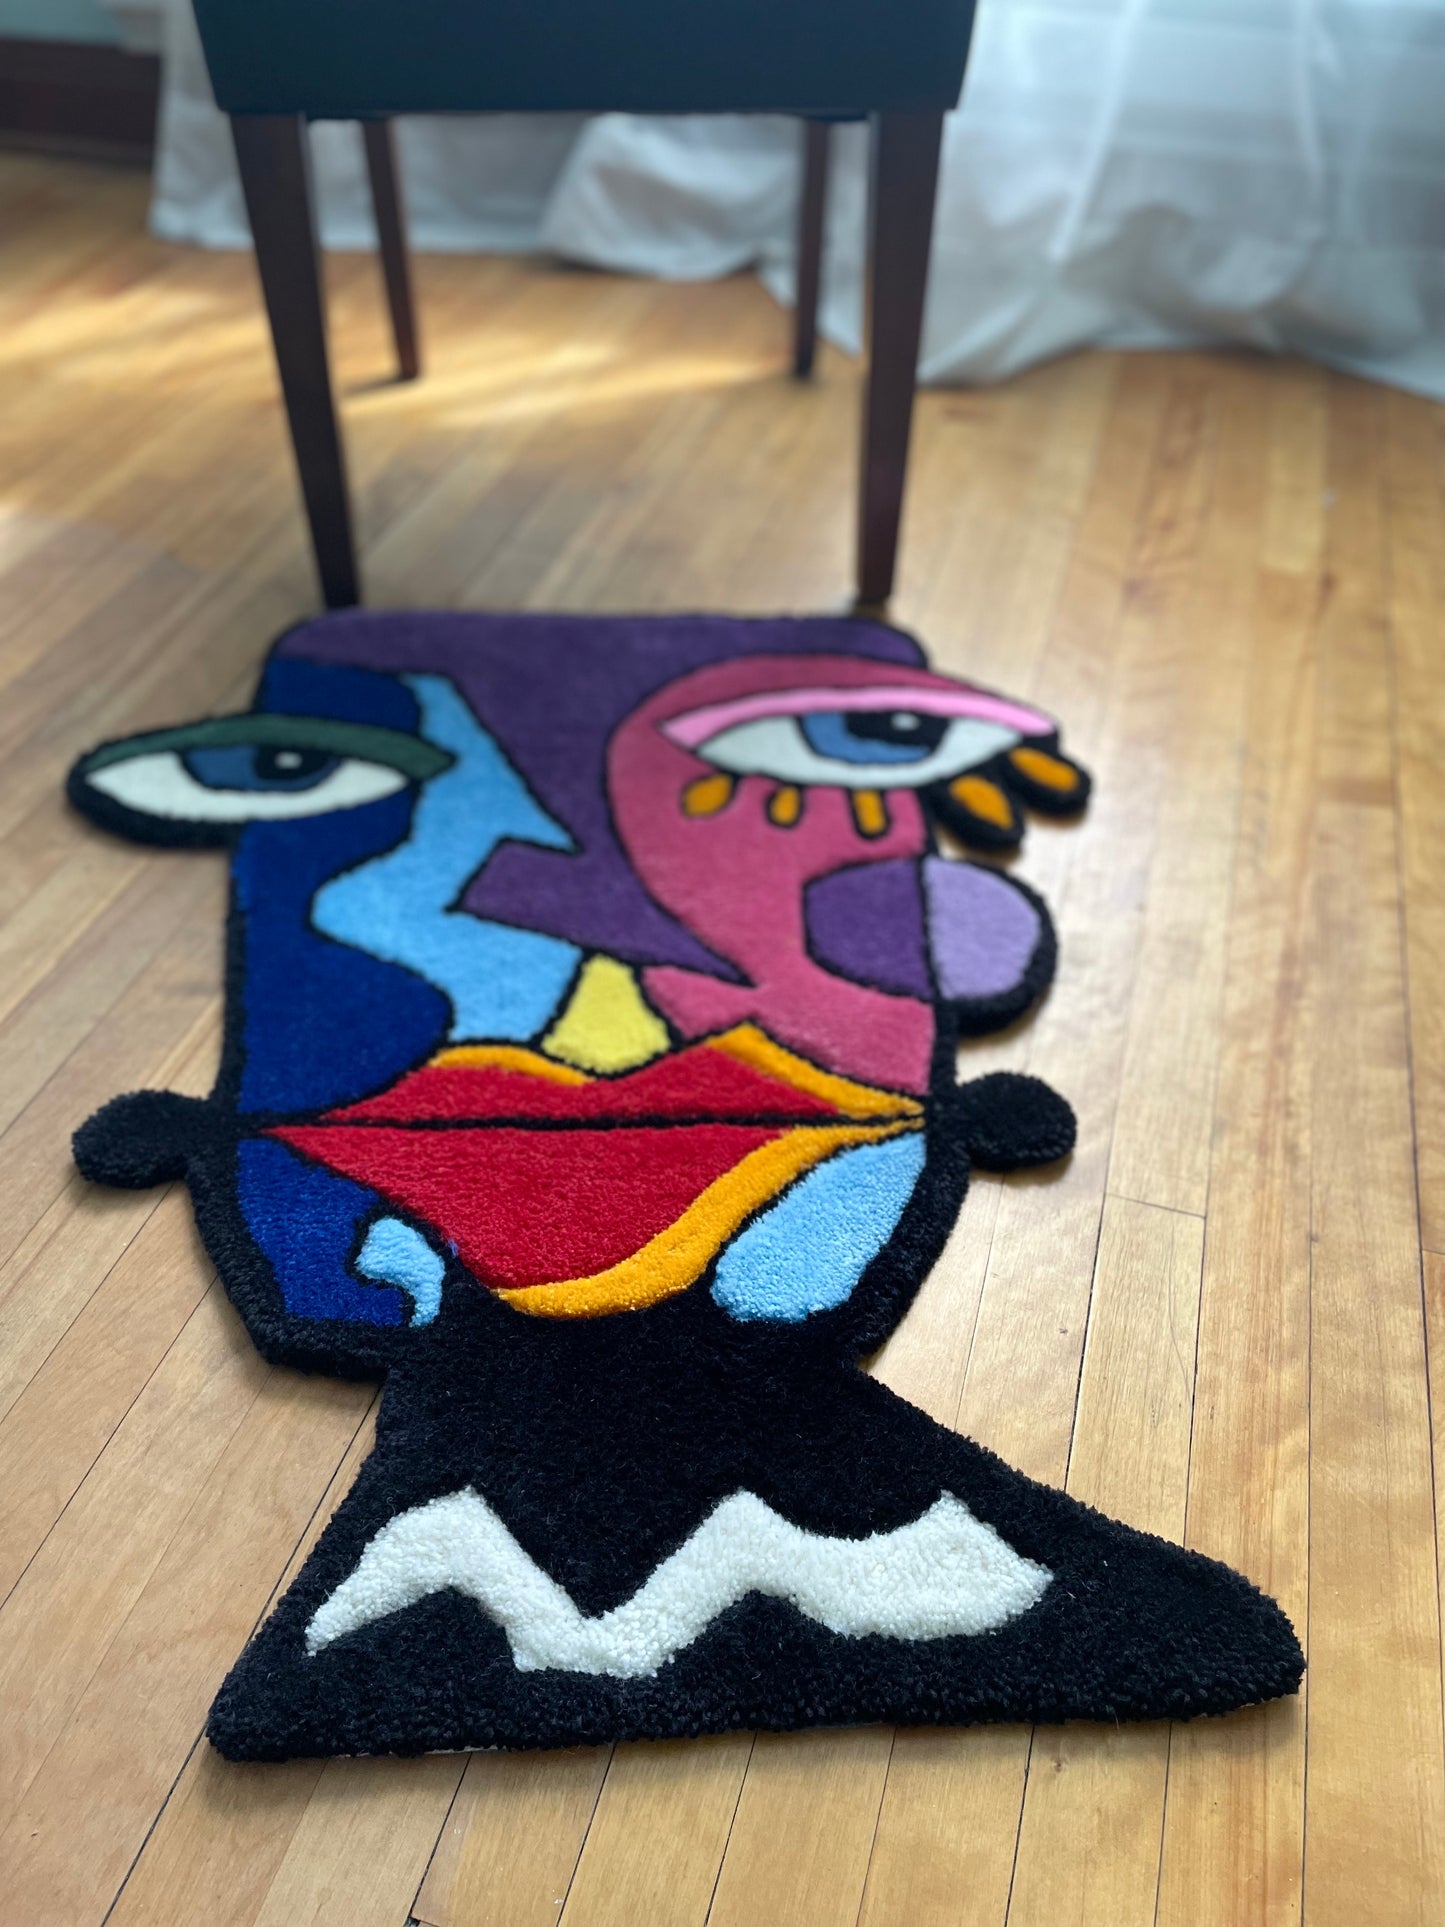 Abstract art - Handmade tufted rug - Acrylic + 100% Wool Blend - Home decor carpet